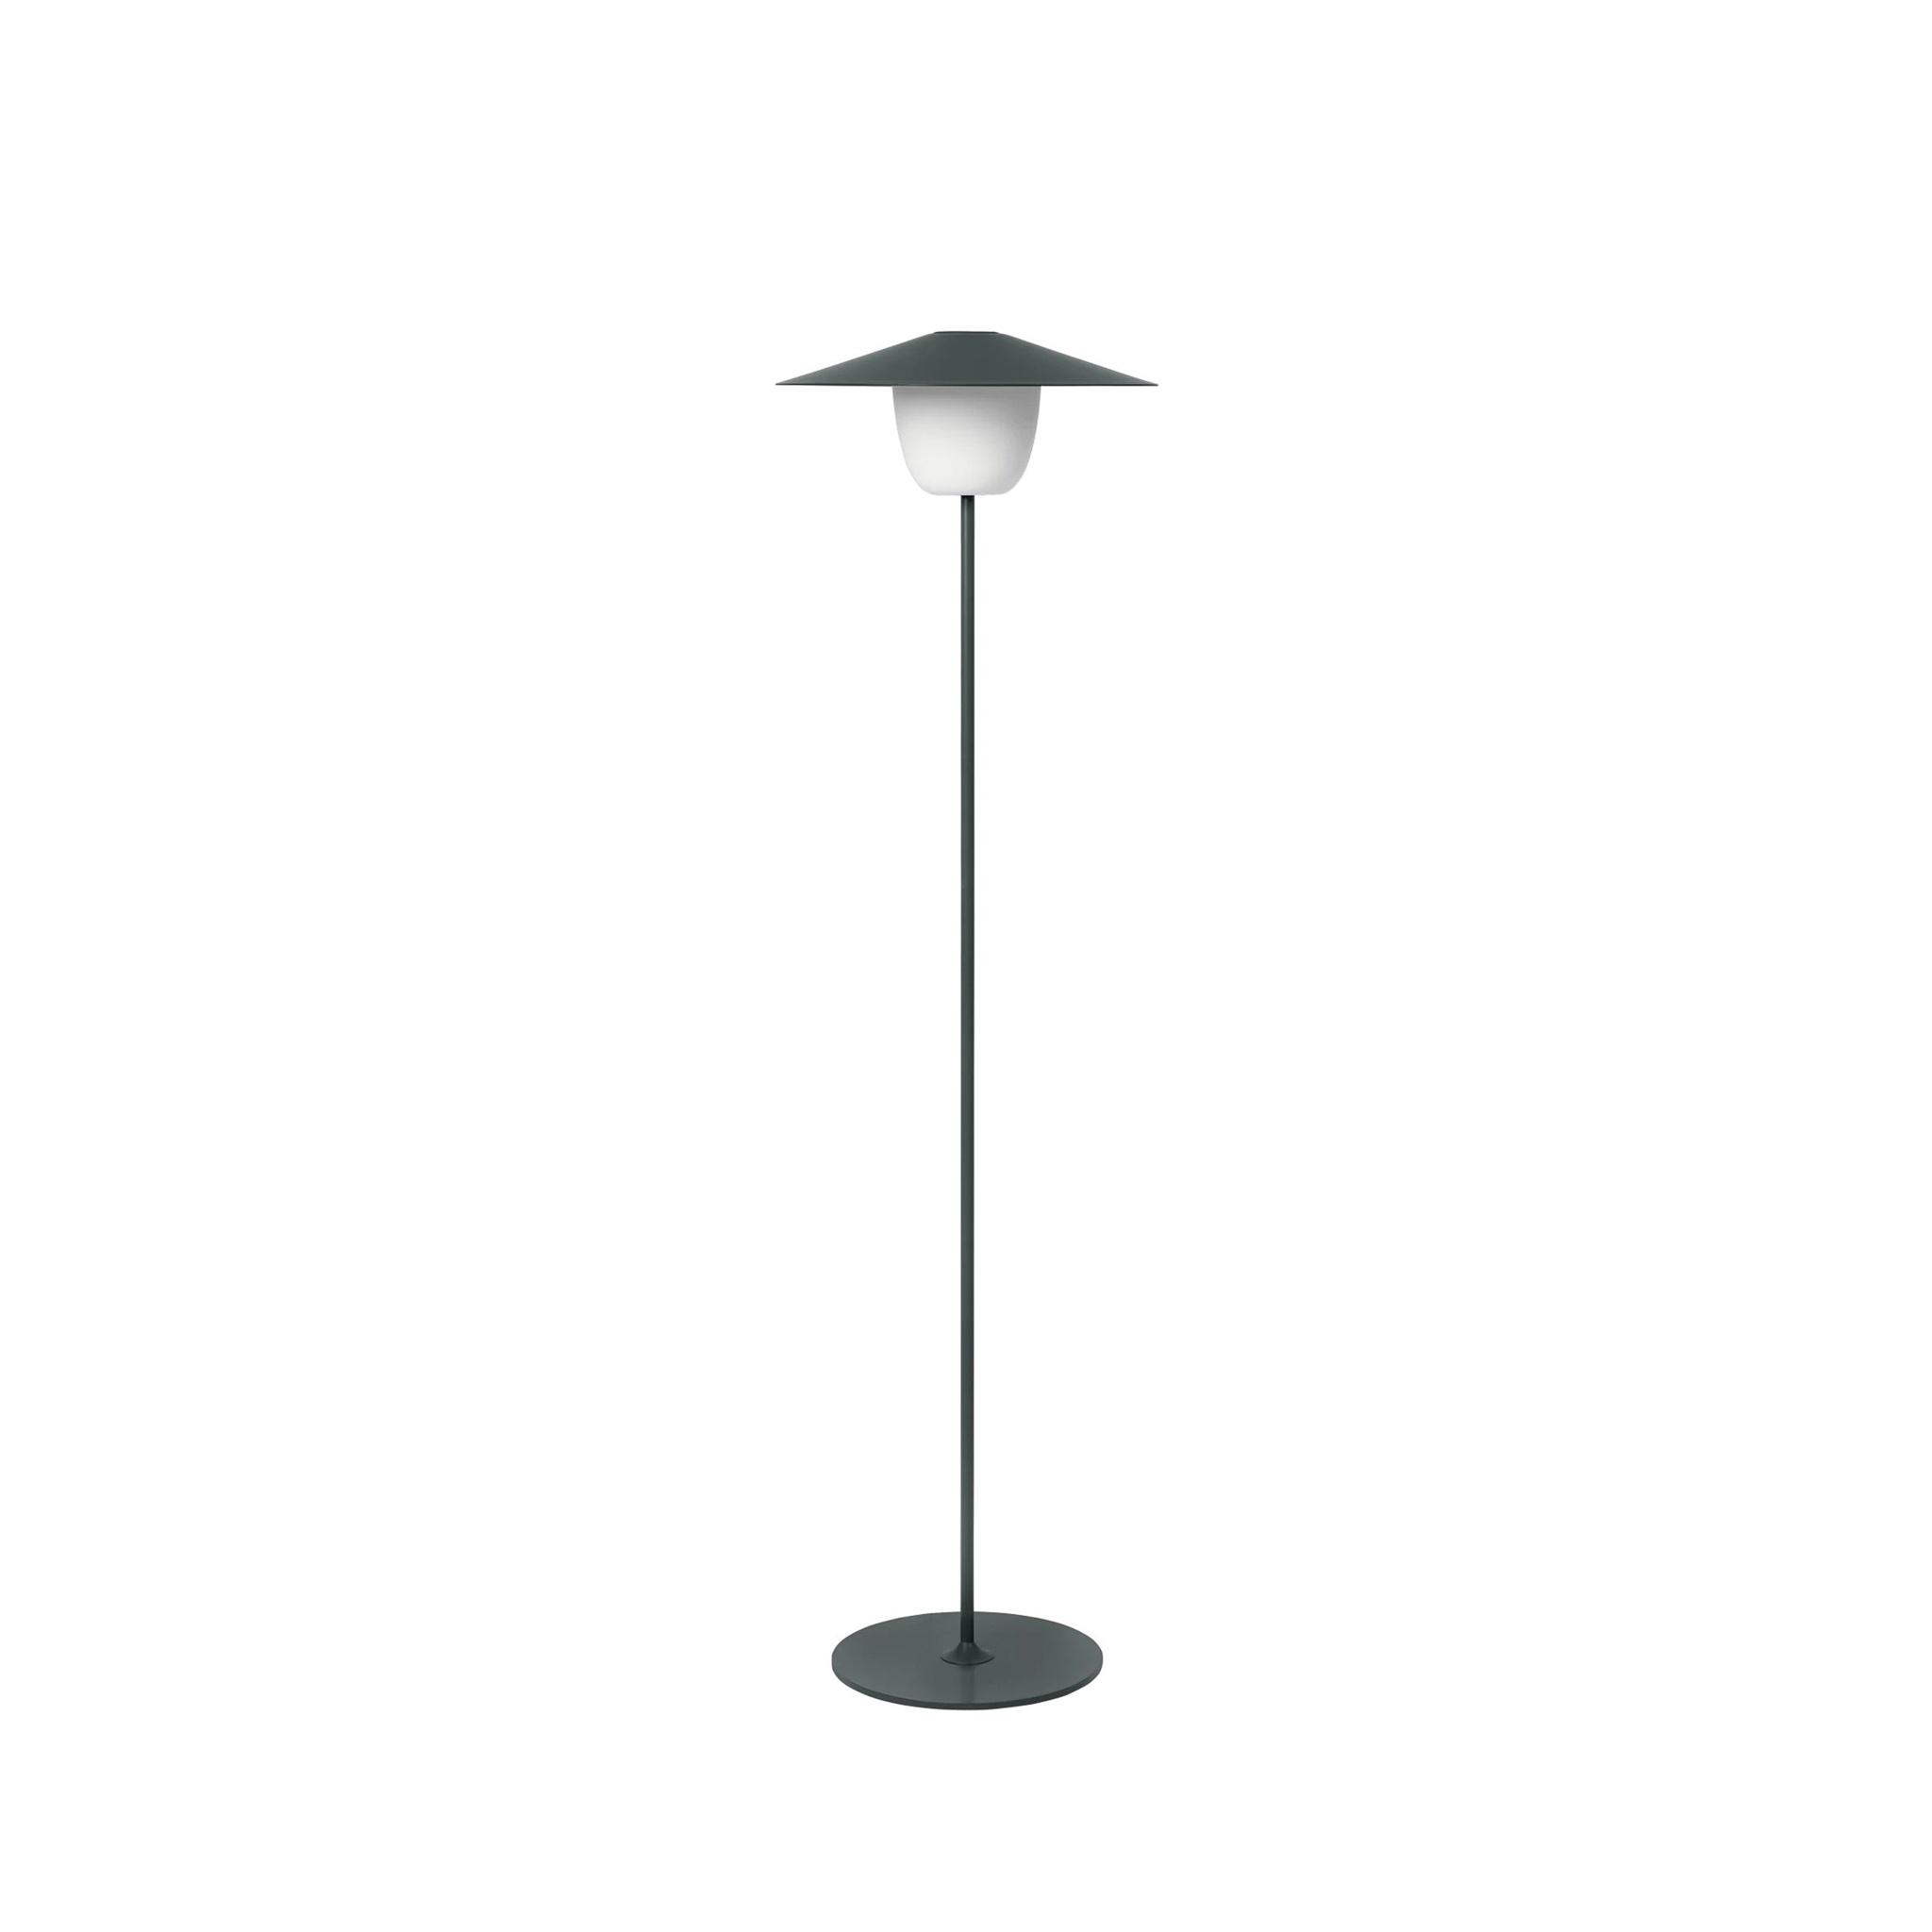 BLOMUS // ANI LAMP FLOOR - MOBILE LED-STEHLEUCHTE